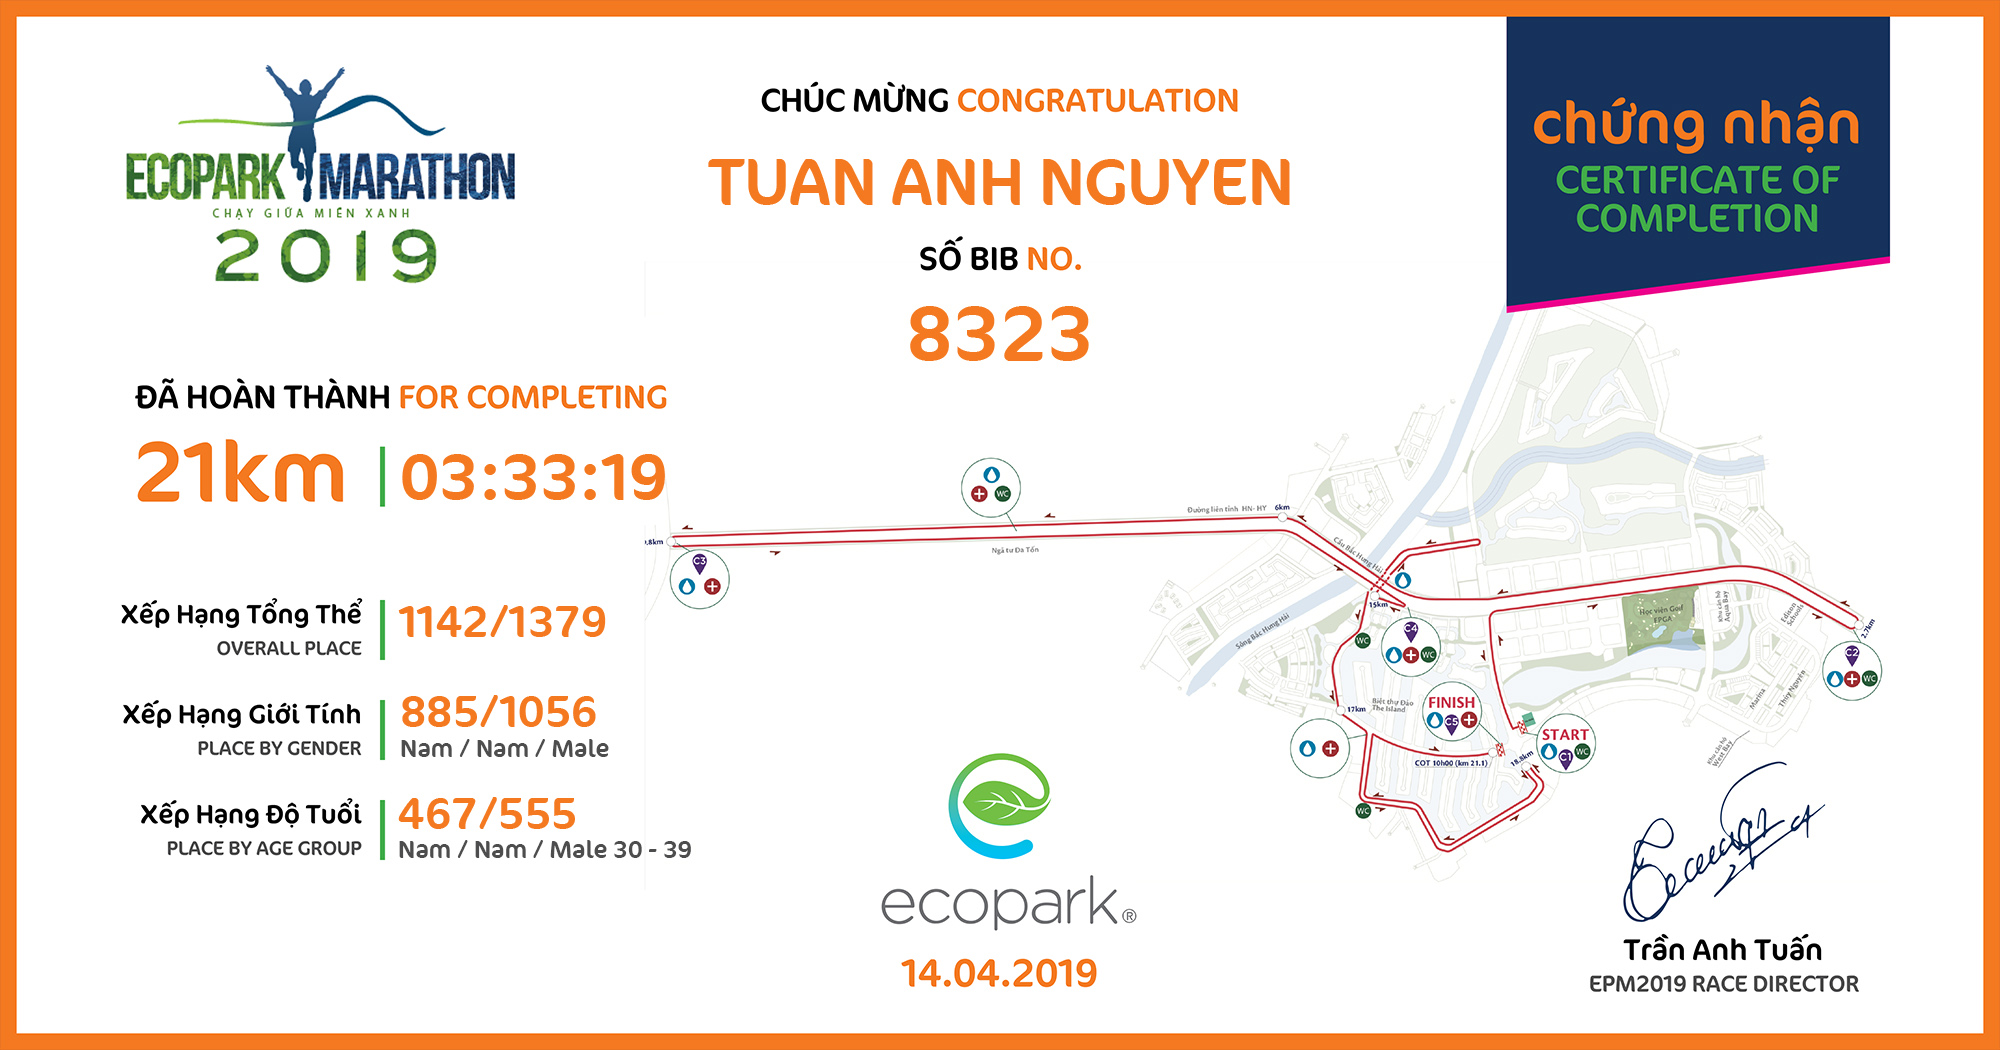 8323 - Tuan Anh Nguyen